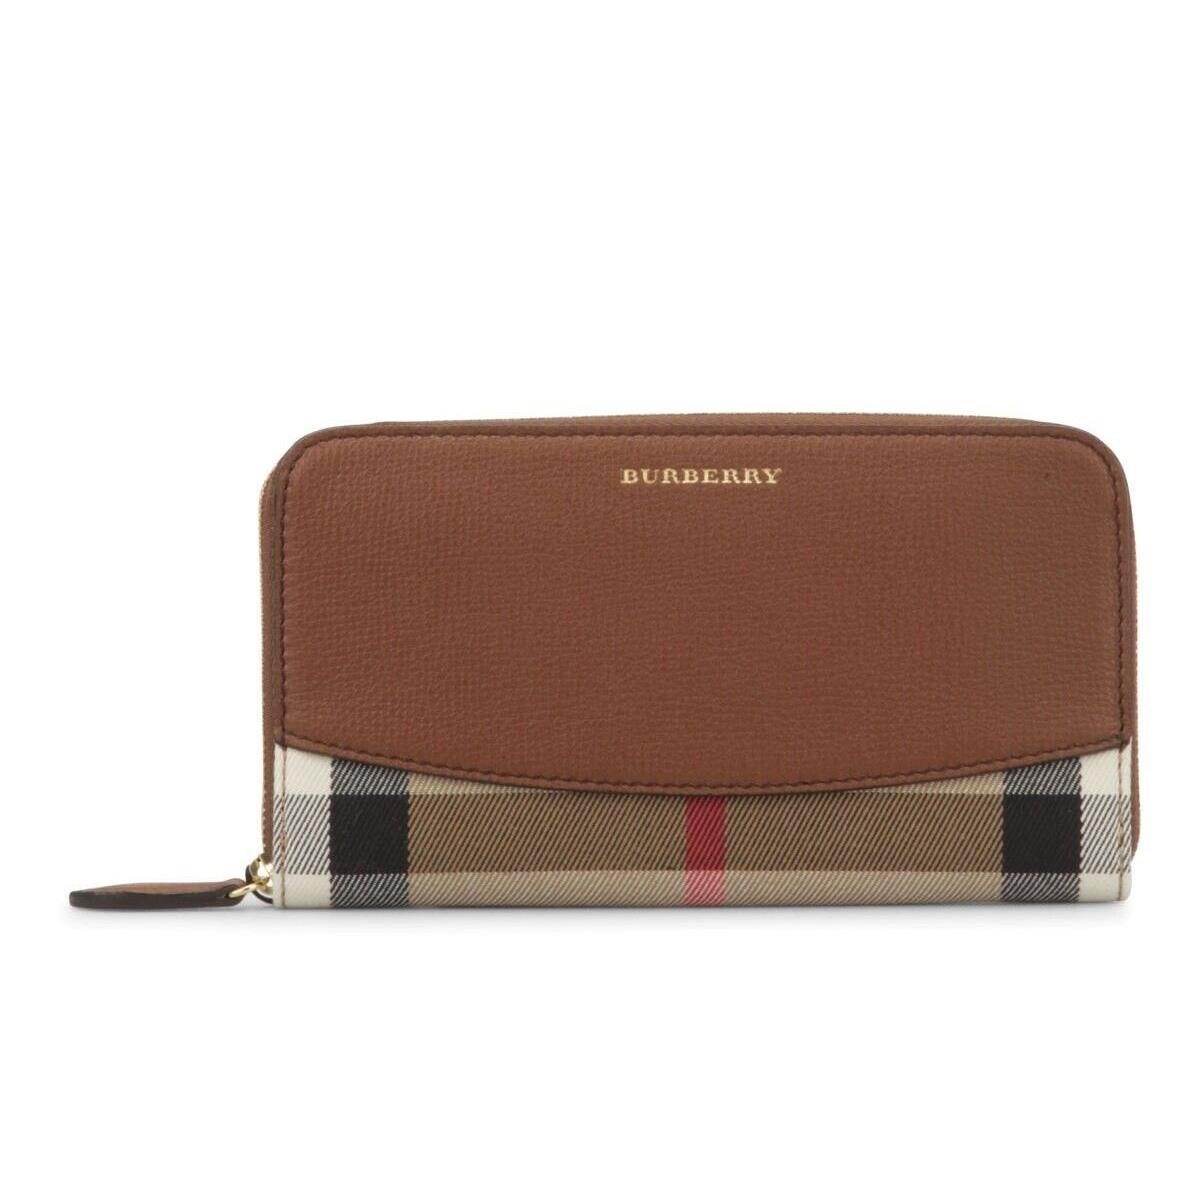 Burberry wallet  - Brown 0